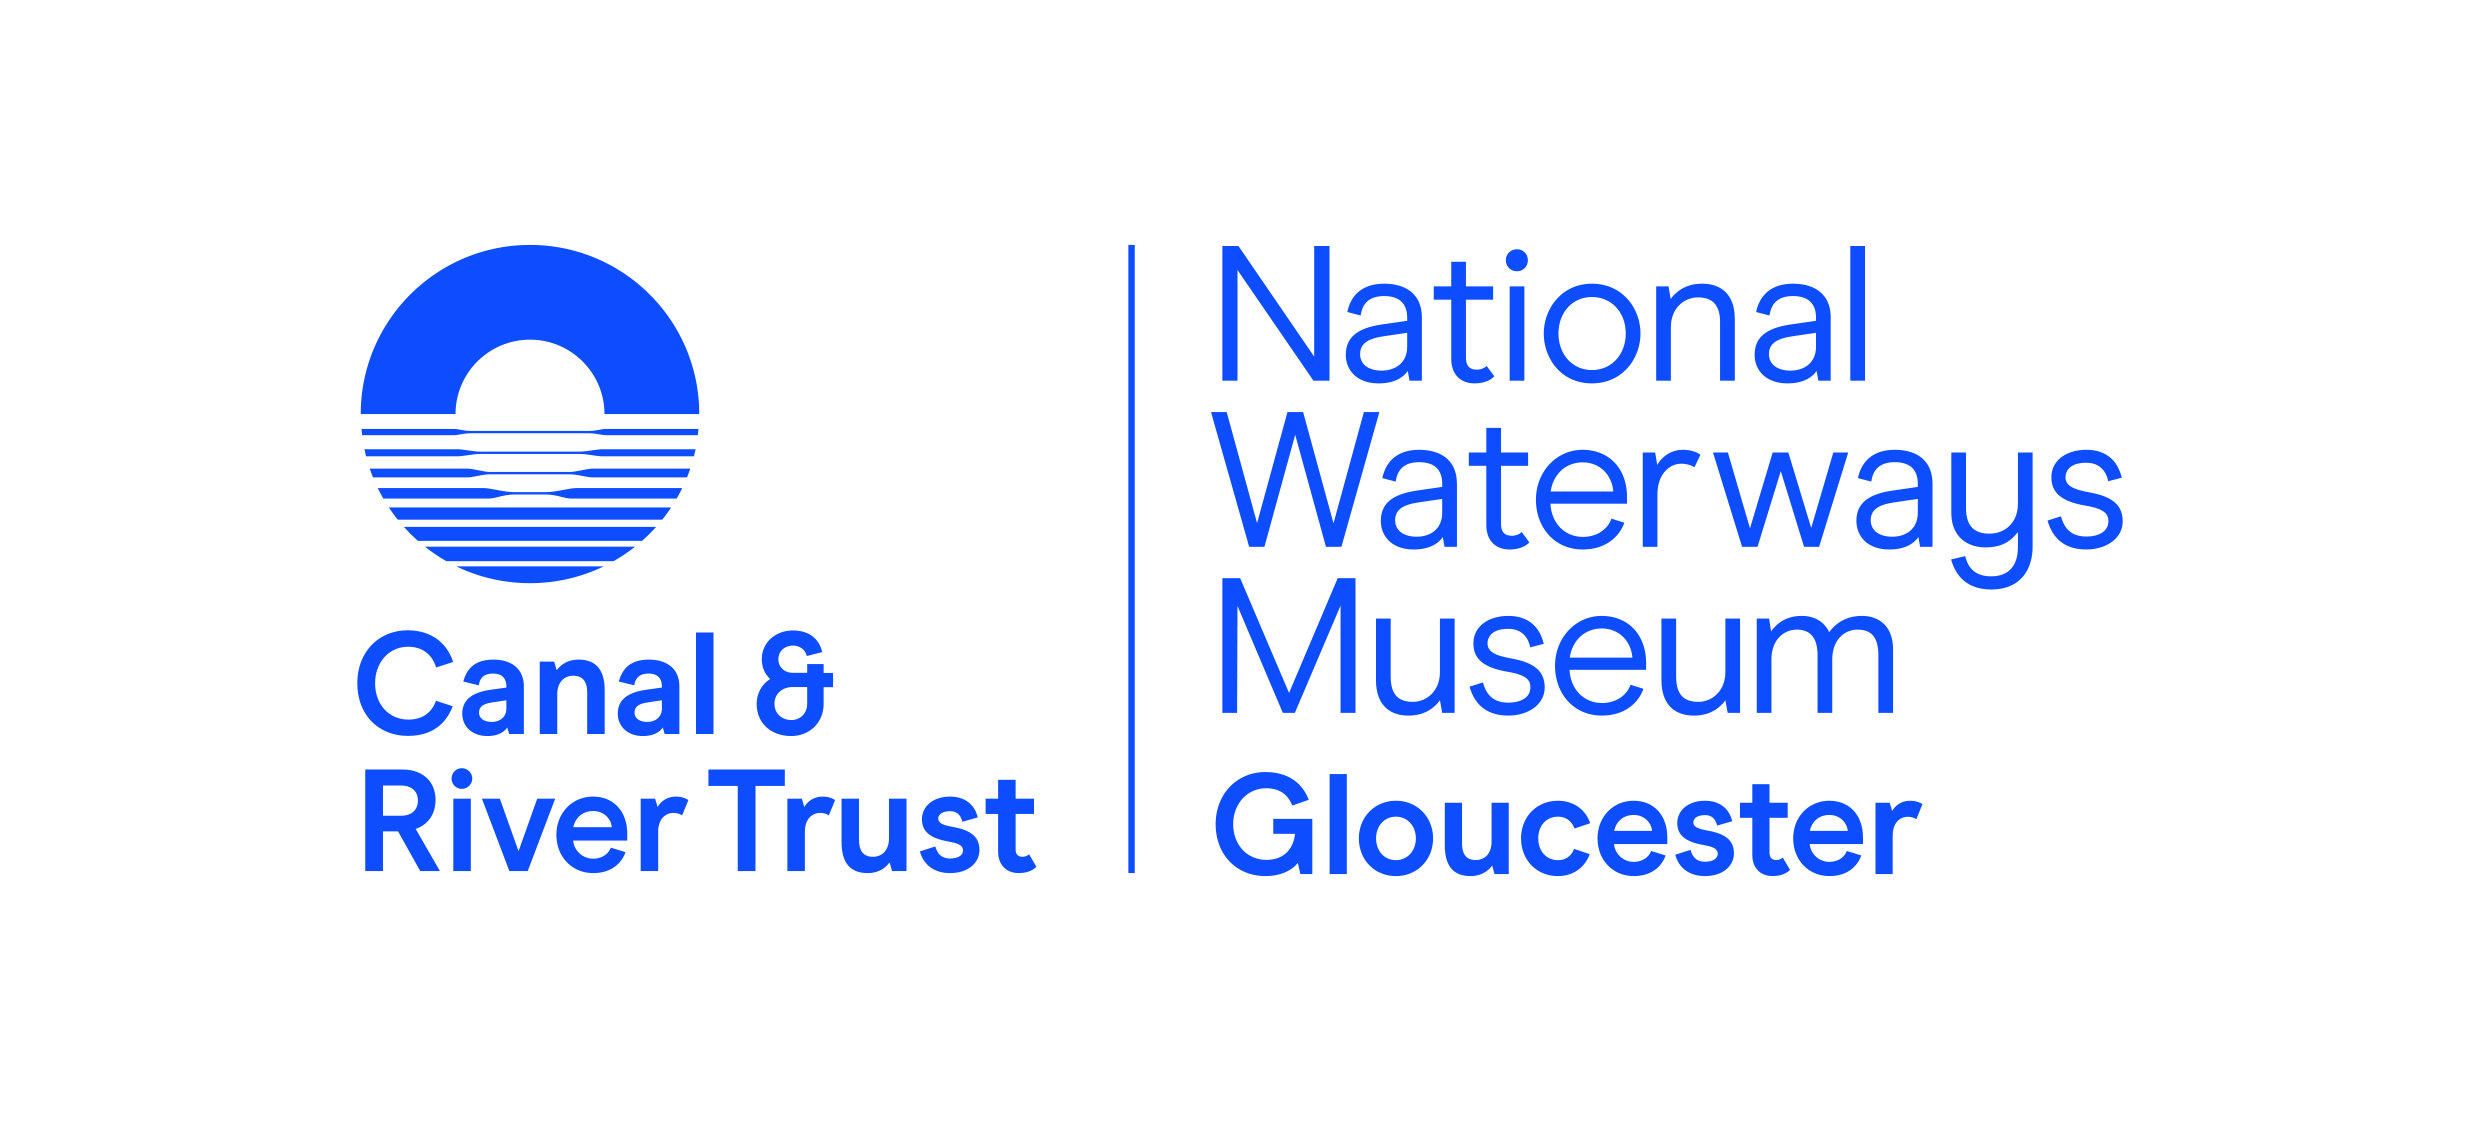 National Waterways Museum Gloucester